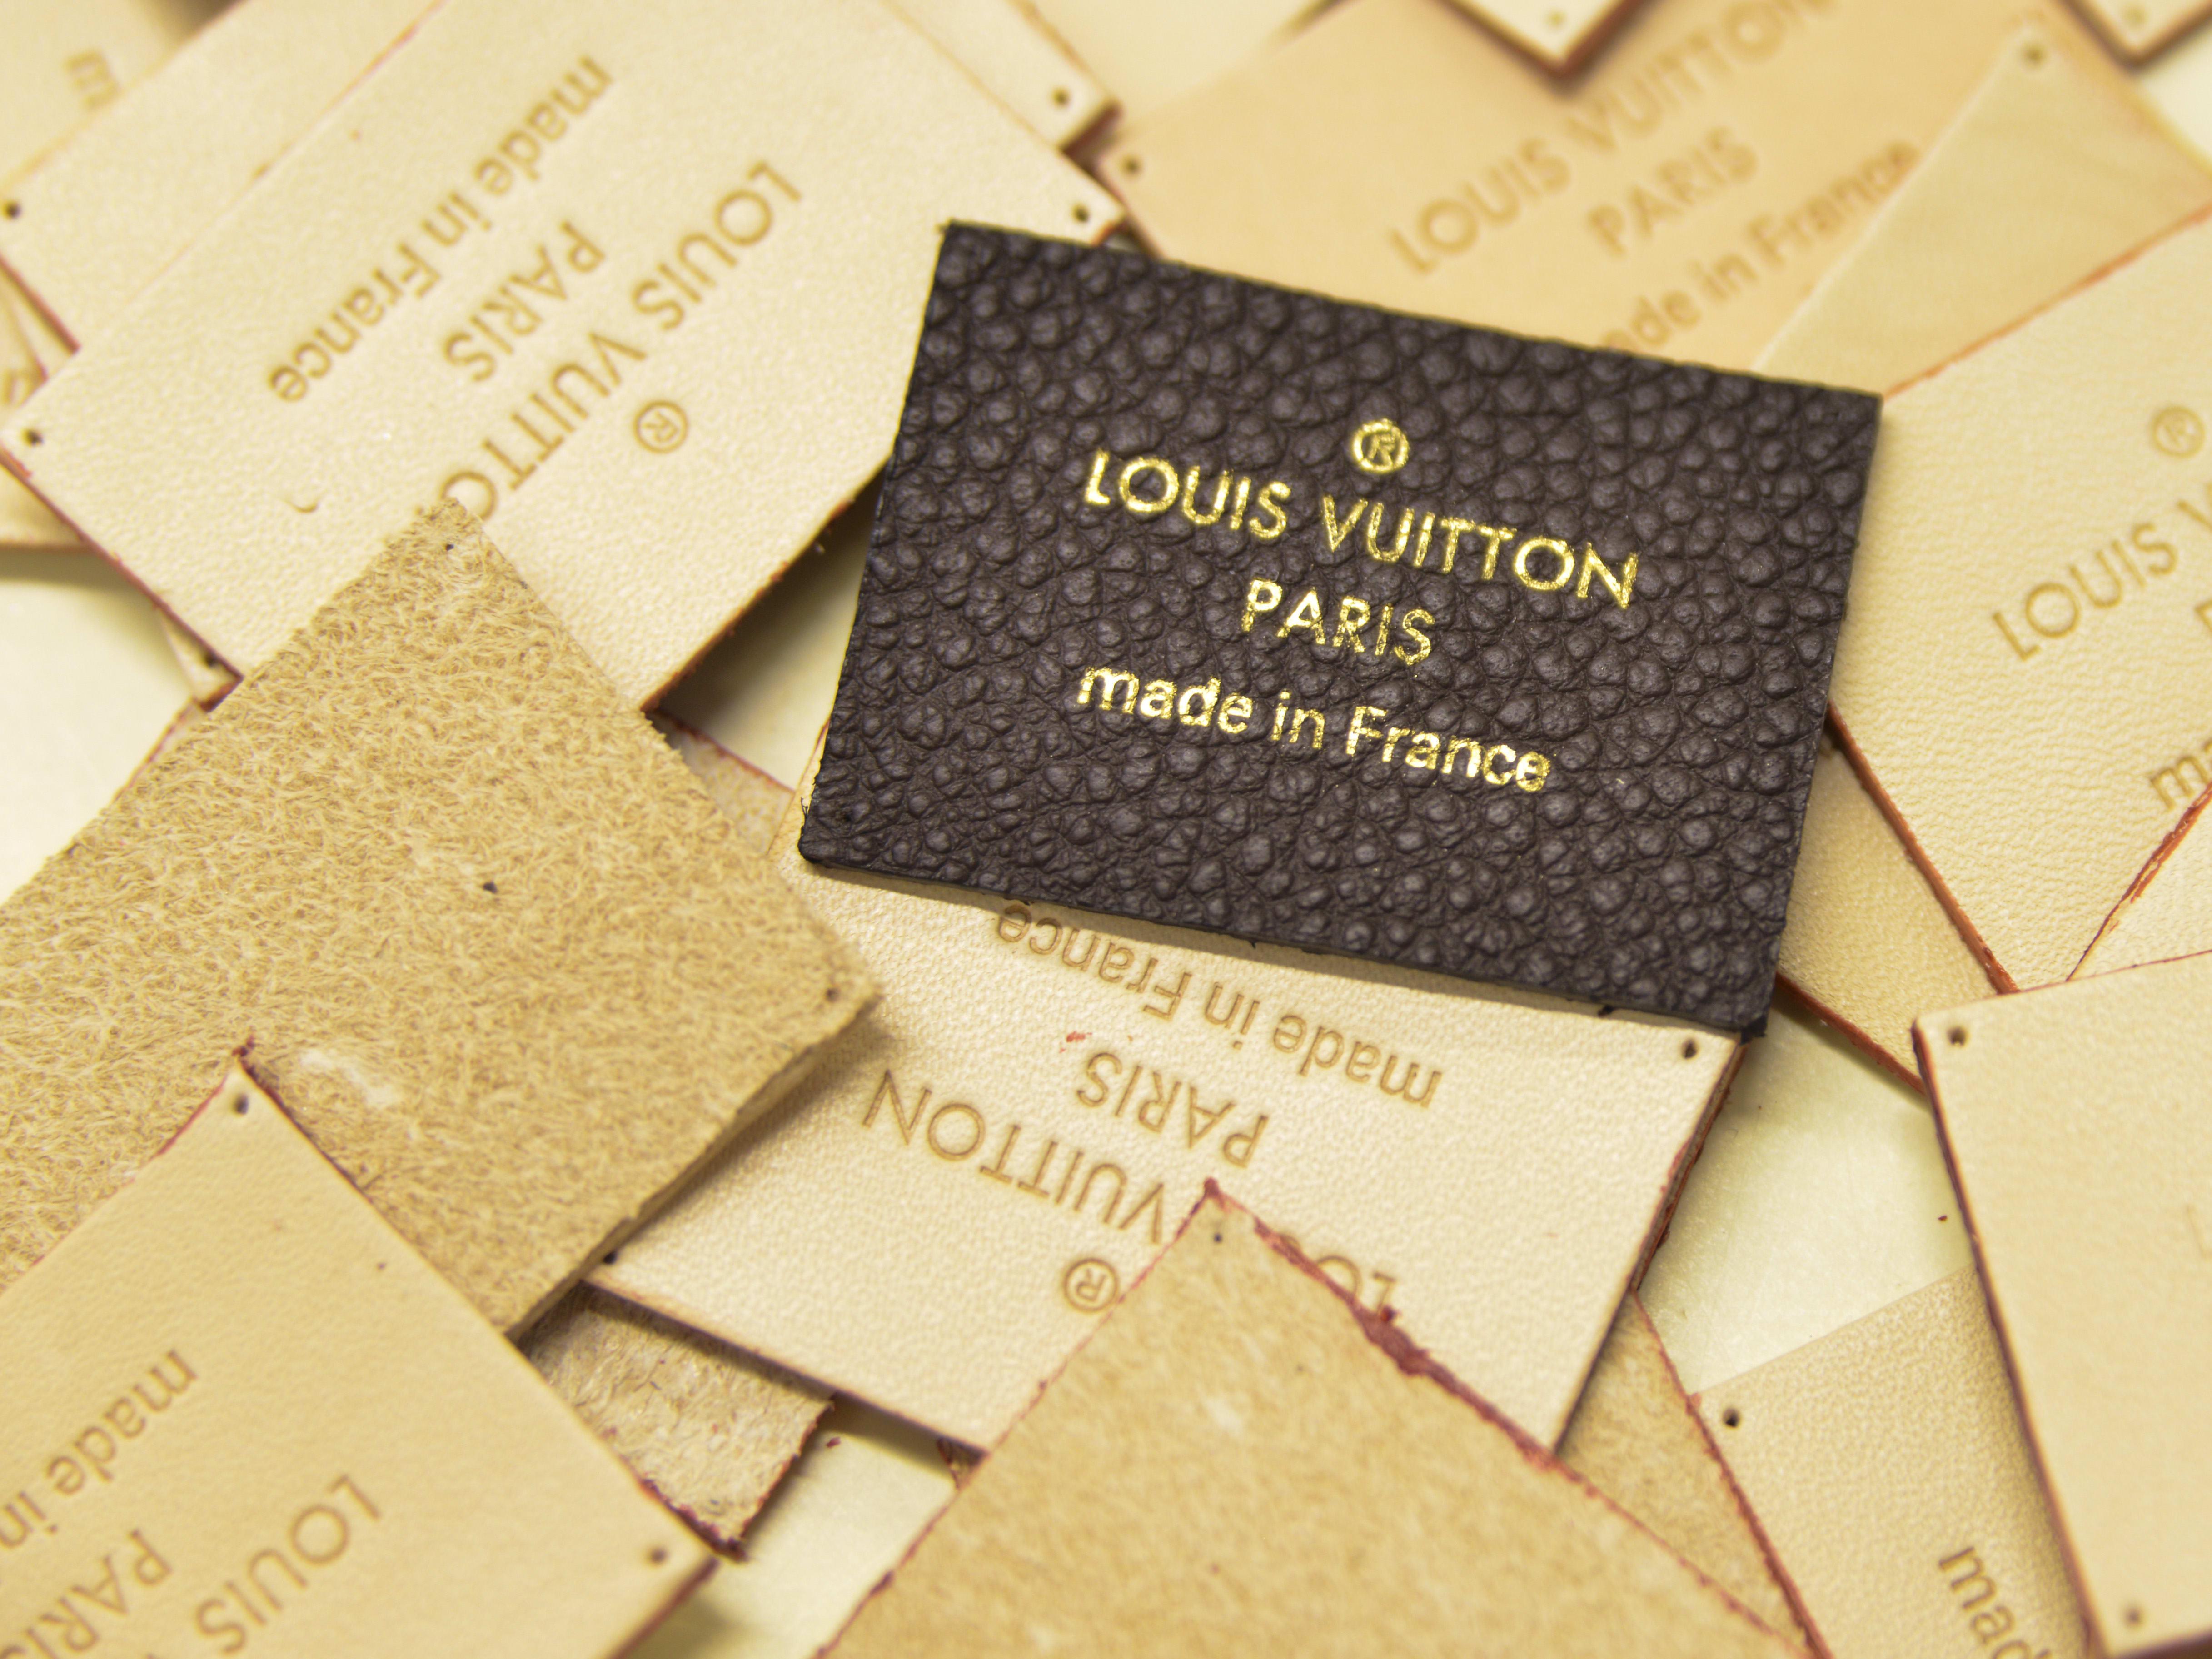 Louis Vuitton's North Texas purse workshop begins making face